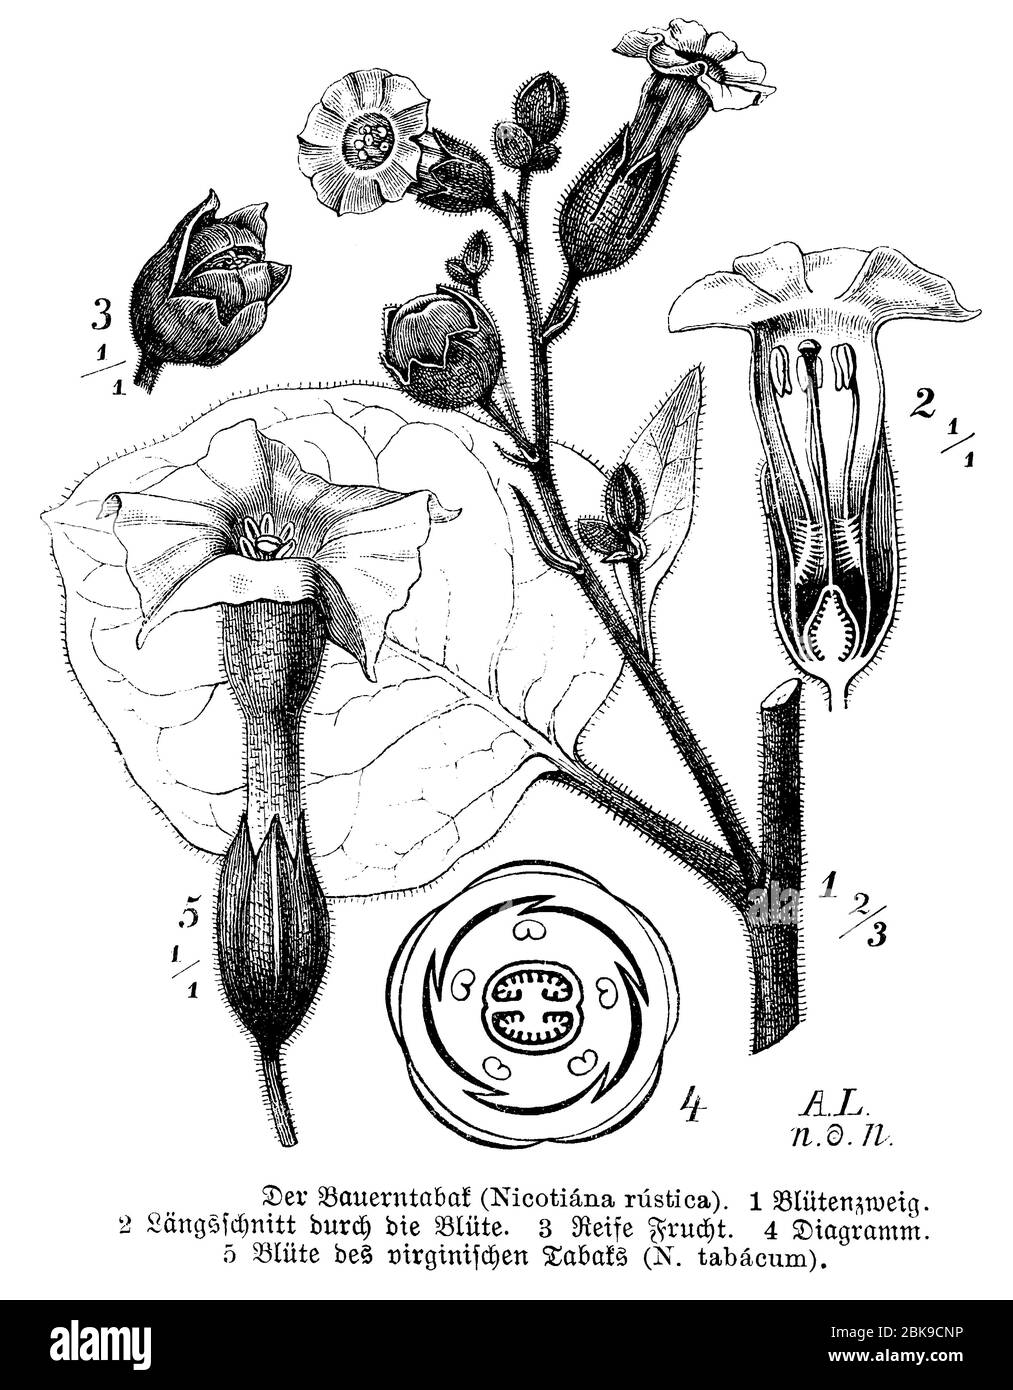 Aztec tobacco / Nicotiana rustica / Bauerntabak (botany book, 1888) Stock Photo